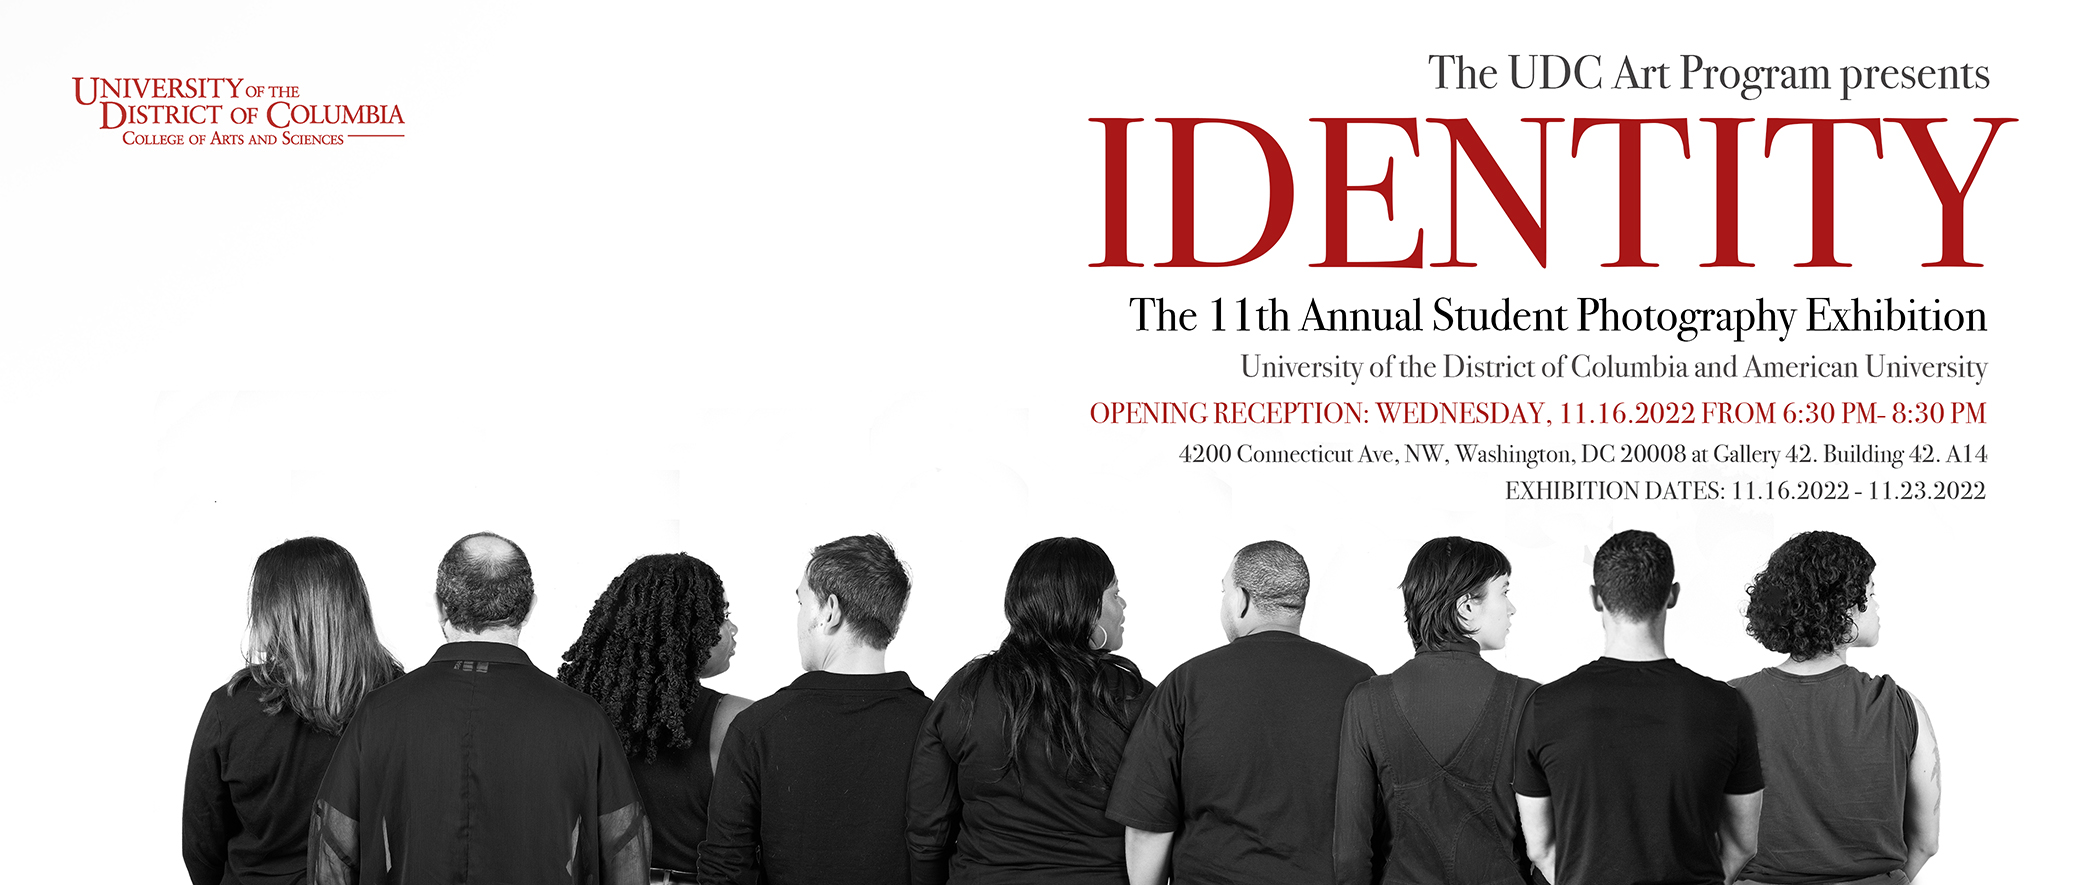 UDC Art Program presents ‘Identity,’ its 11th annual student photography exhibition